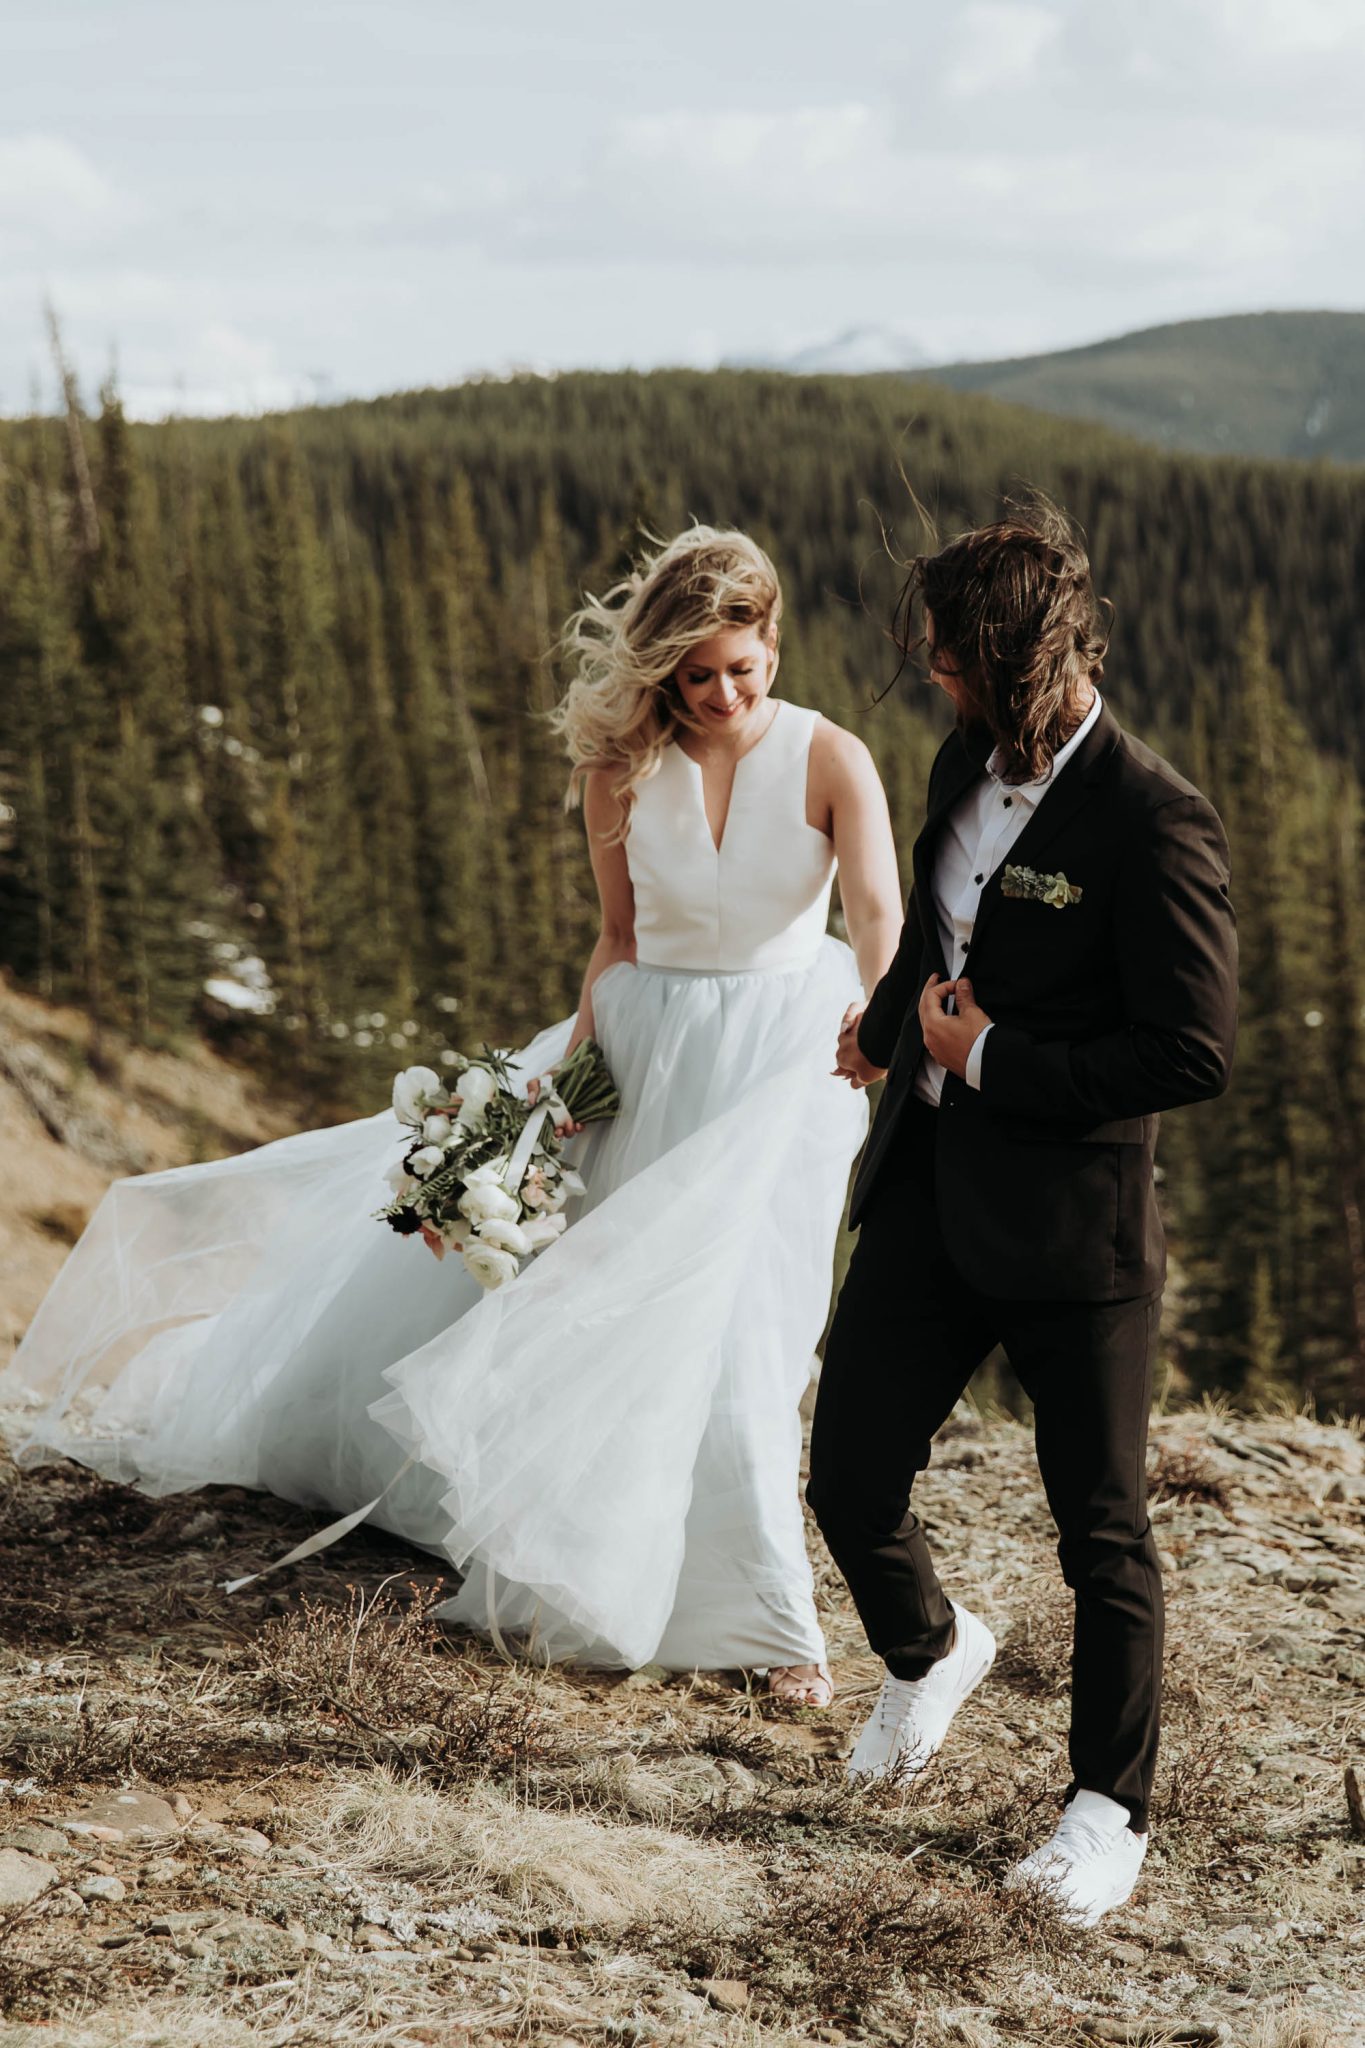 Romantic Bridal Gown Mountainous Adventure Session featuring Contemporary Attire & Alberta Views Featured on Bronte Bridë